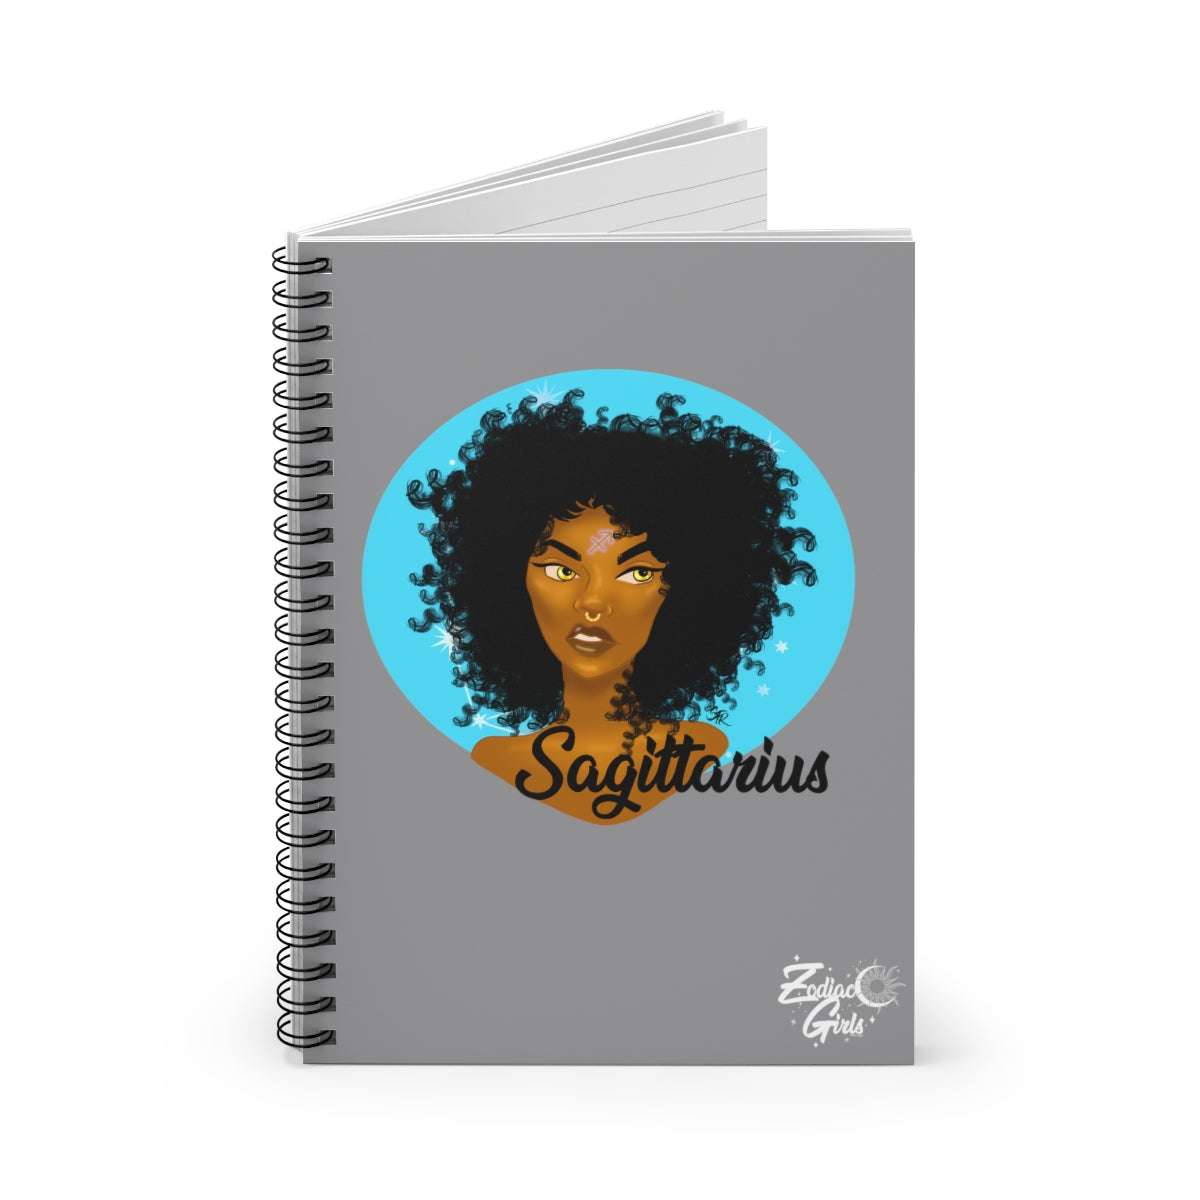 Zodiac Girls "Sagittarius" Spiral Notebook - Ruled Line